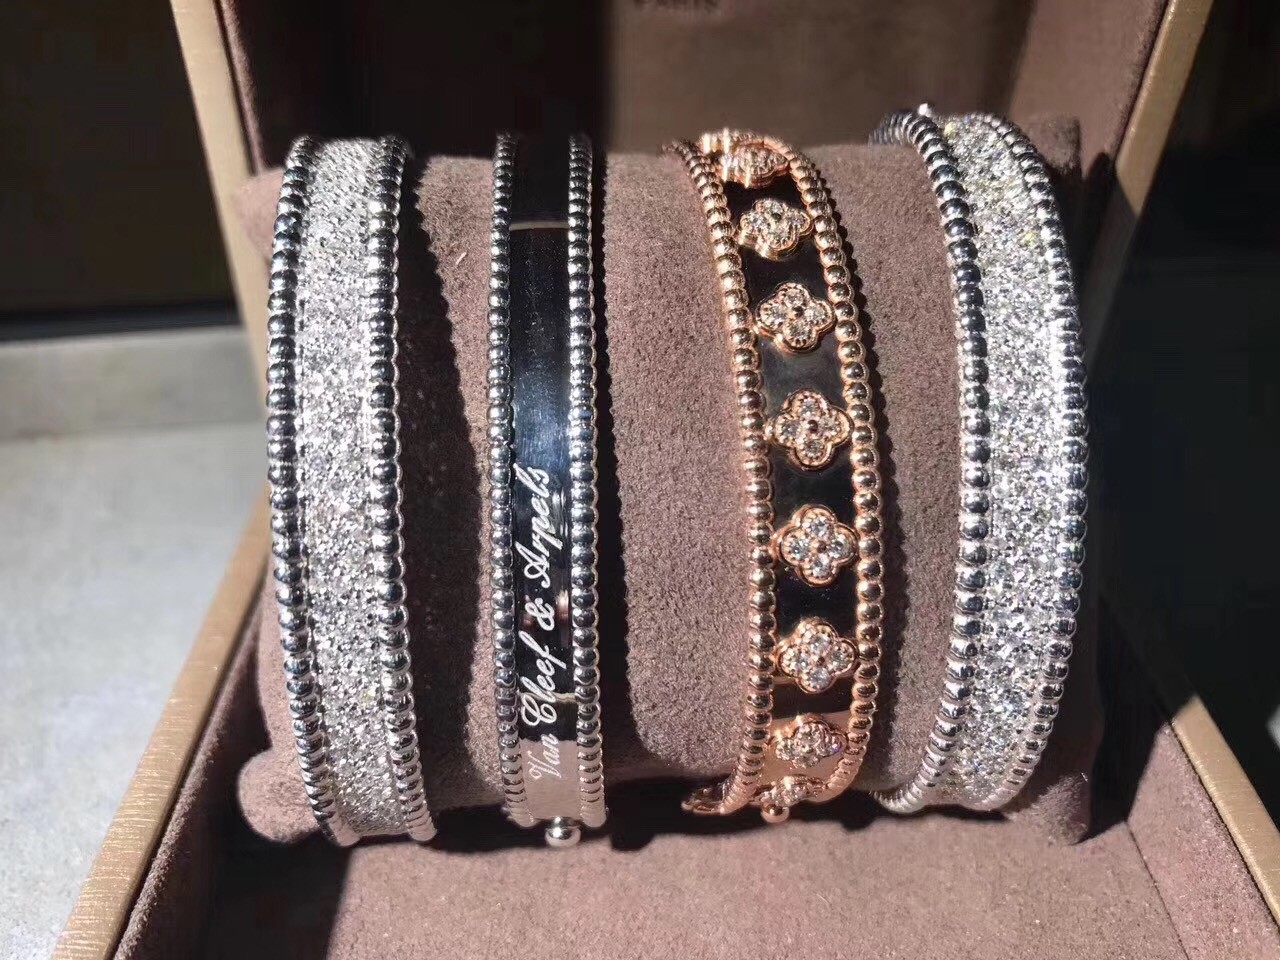  van cleef estate jewelry Shining 18K Pink Gold Van Cleef And Arpels Diamonds Bracelet Medium Model Manufactures